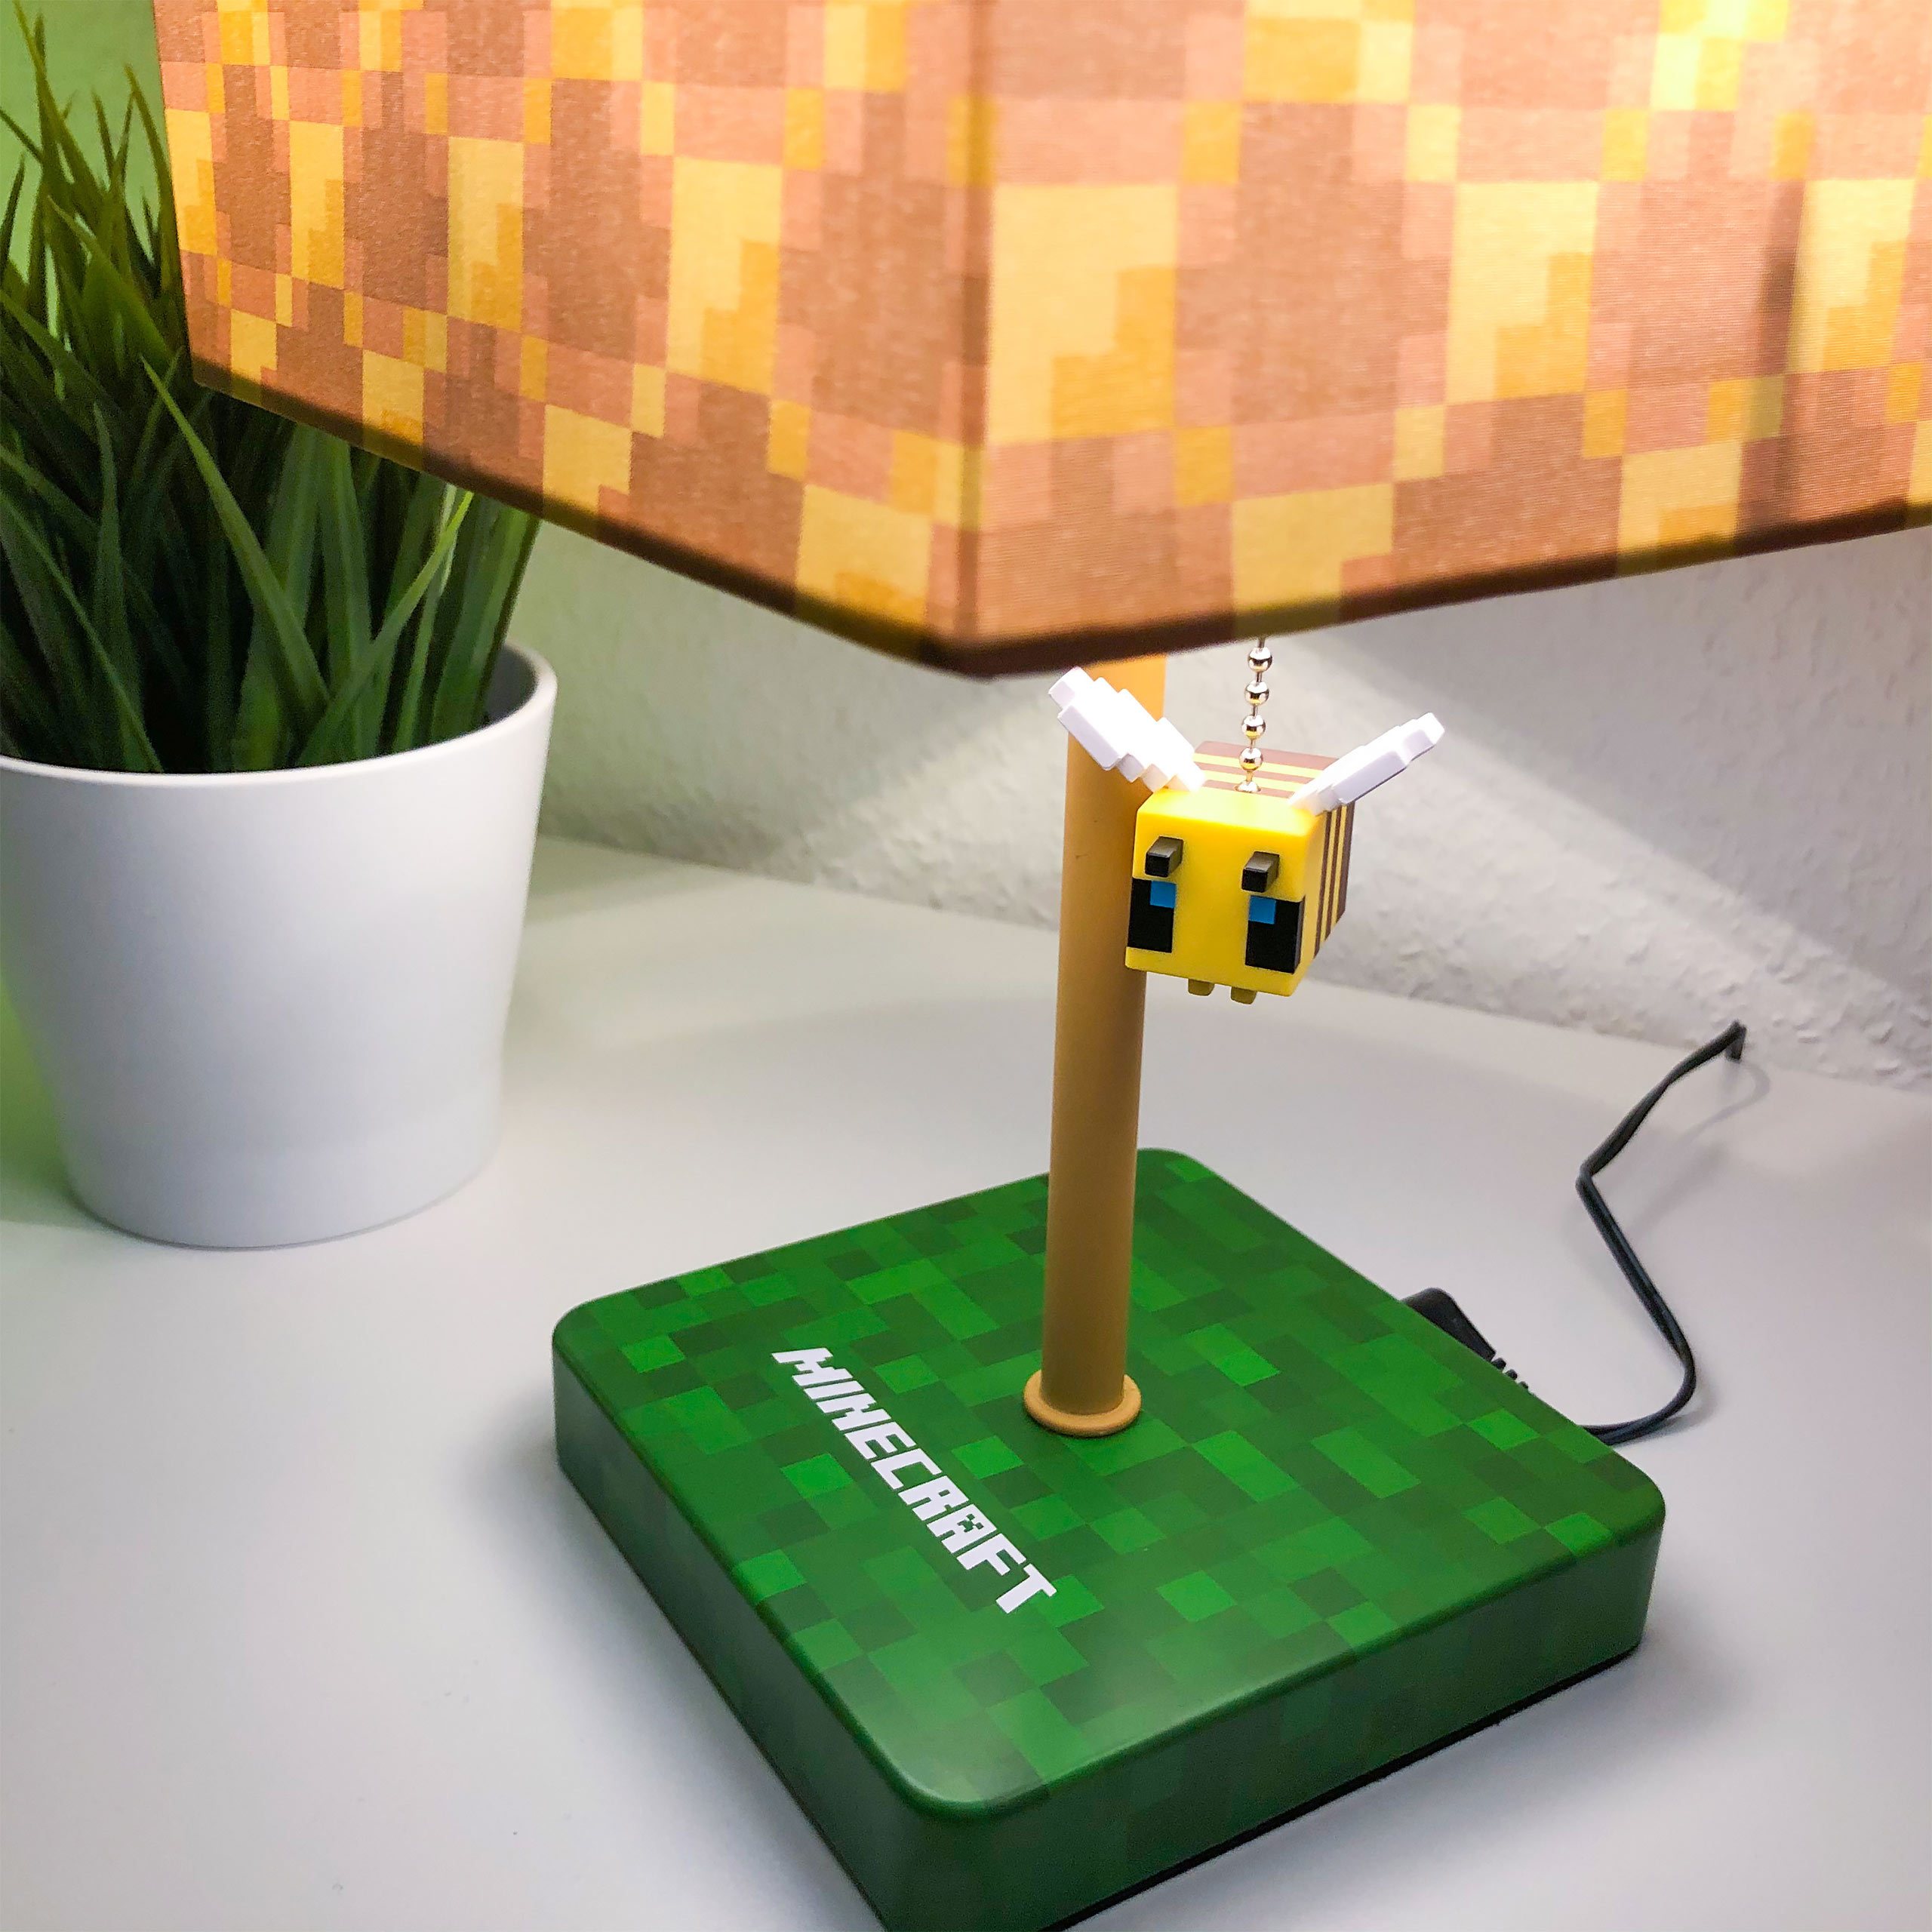 Minecraft - Bee Table Lamp